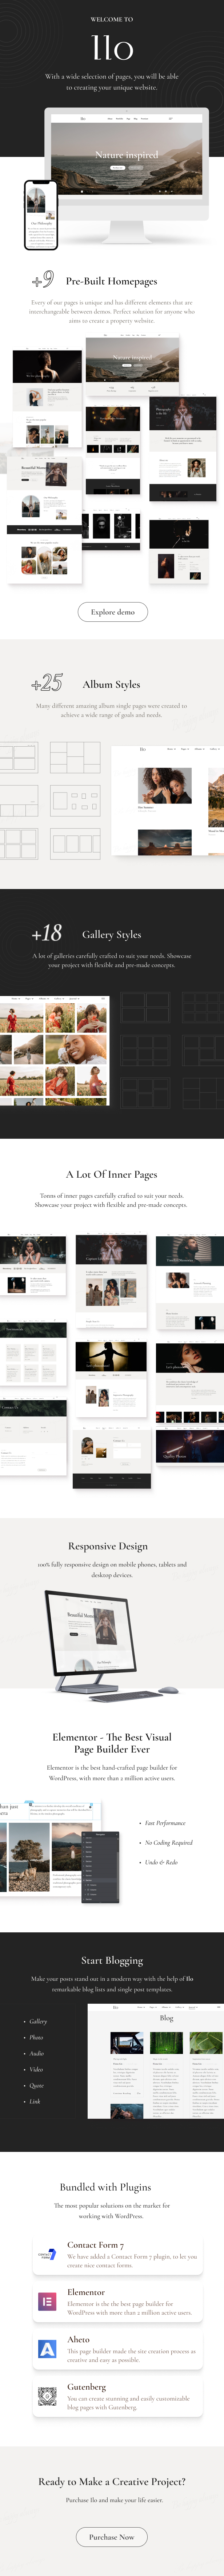 Ilo - Photography WordPress Theme - 2